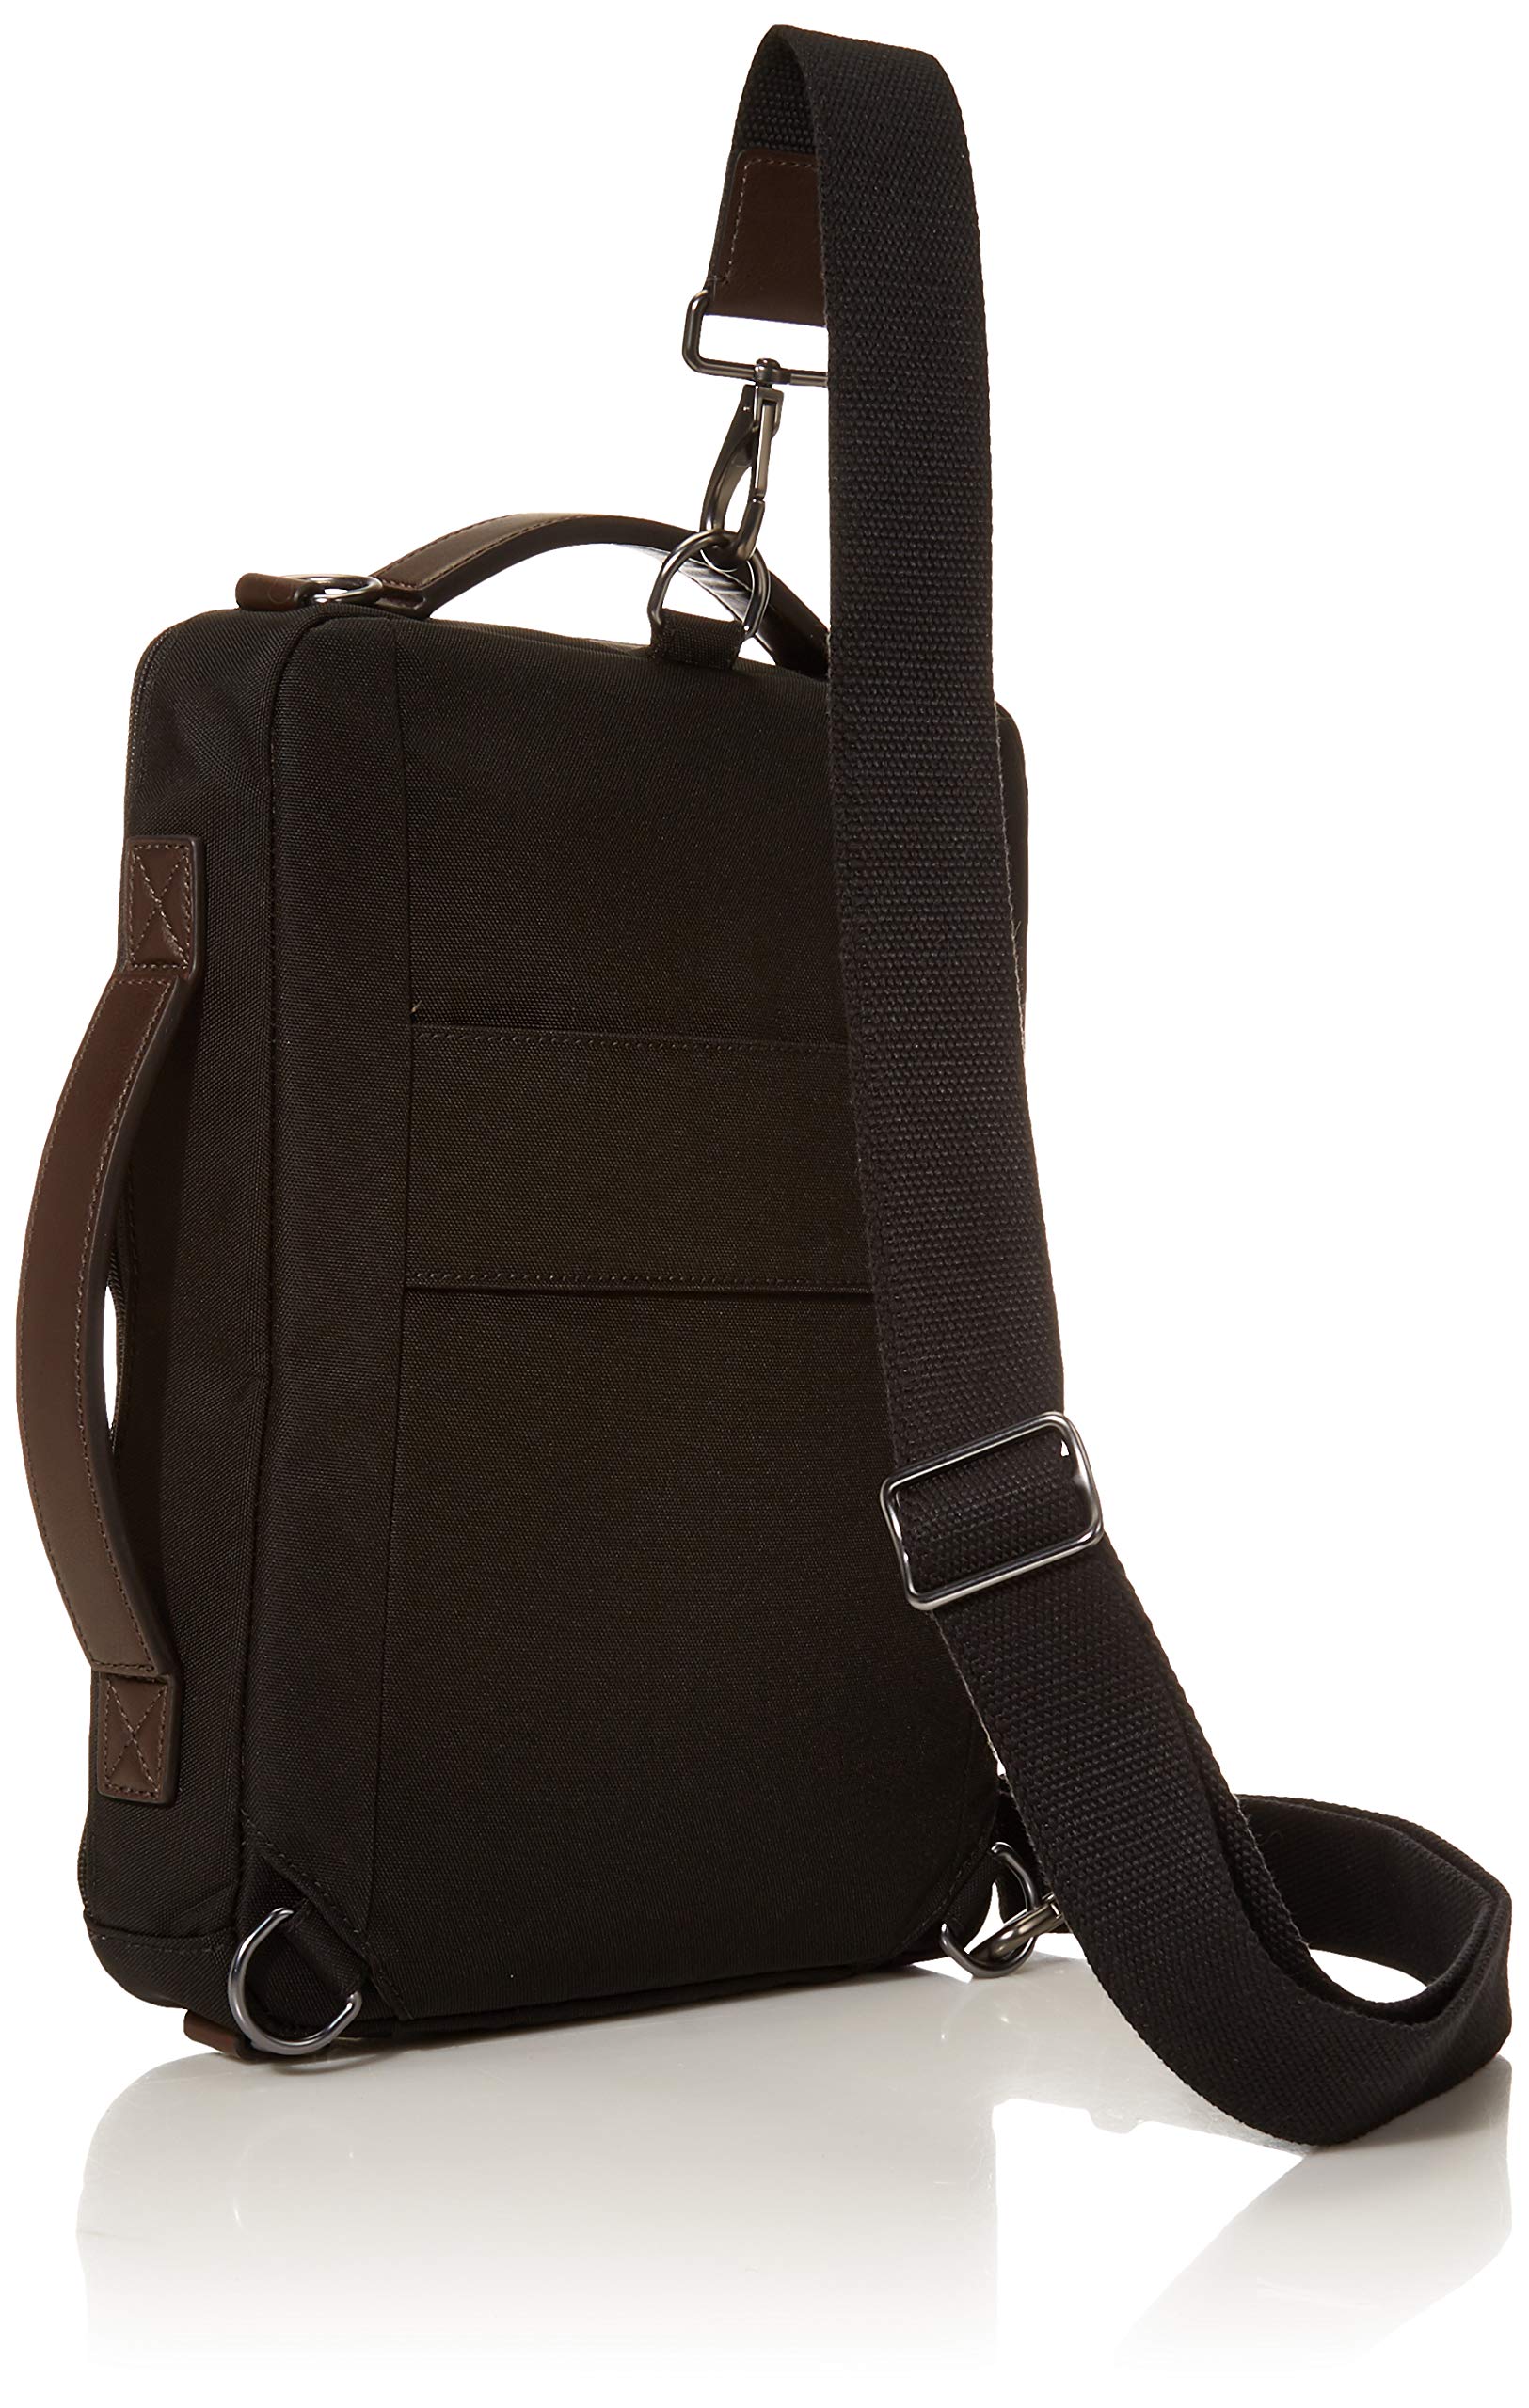 Fossil Men's Buckner Fabric Small Convertible Travel Backpack and Briefcase Messenger Bag, Black , (Model: MBG9475001)